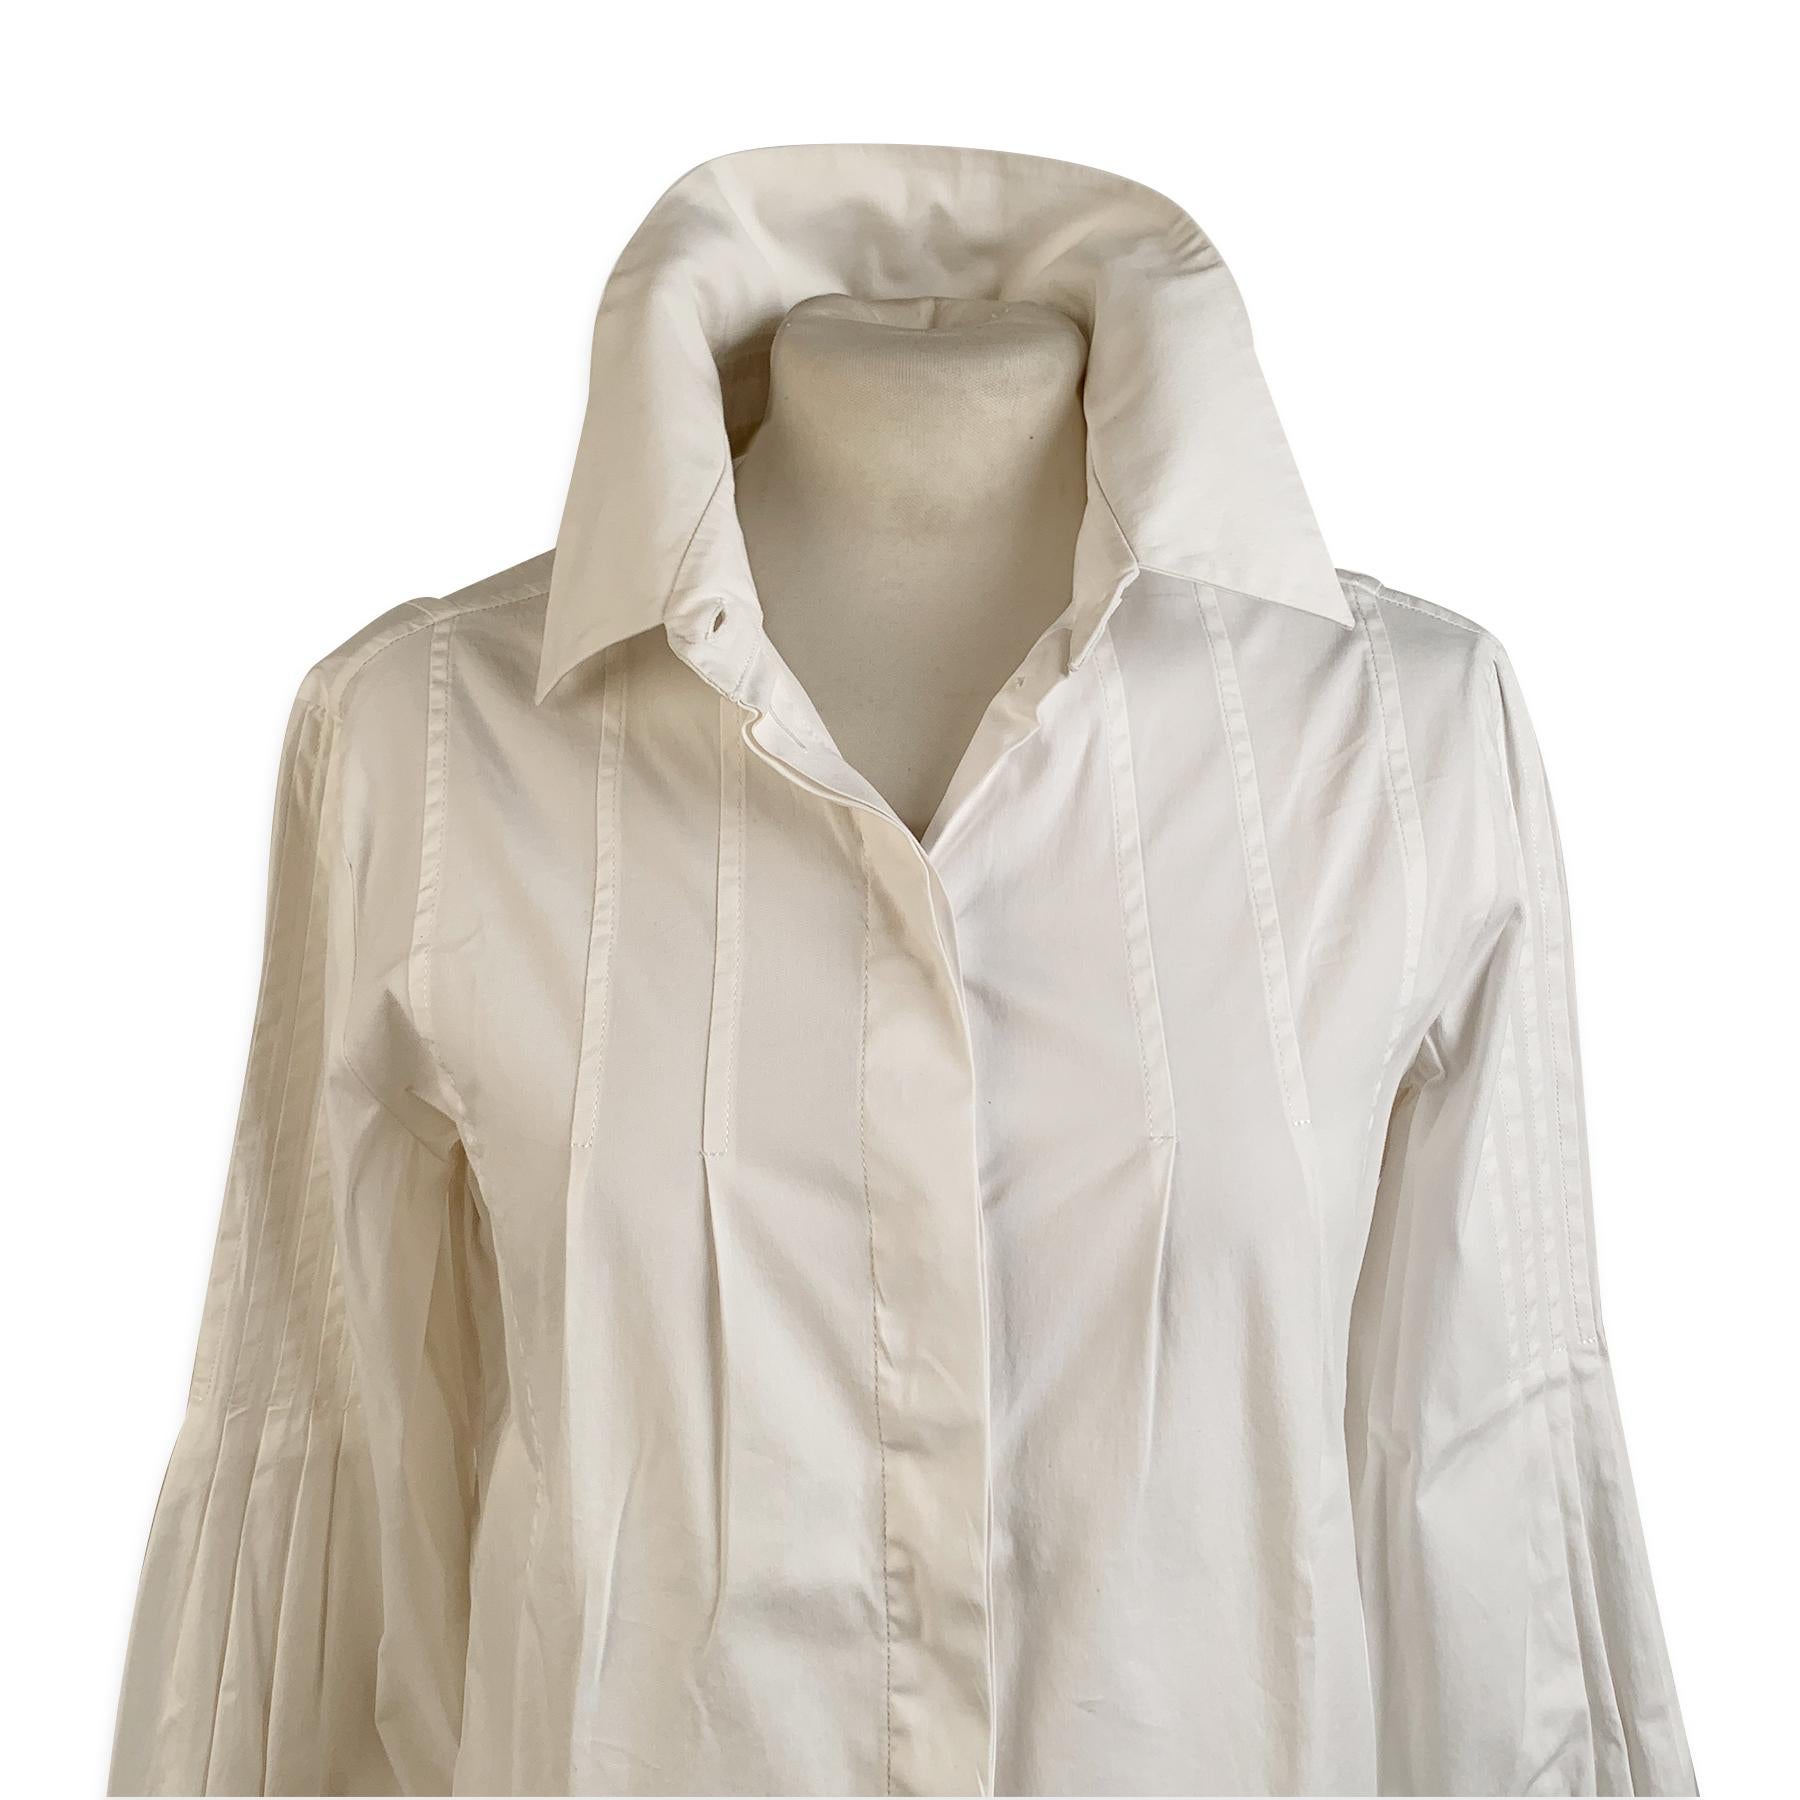 Gray Christian Dior White Cotton Blend Button Down Shirt Size 44